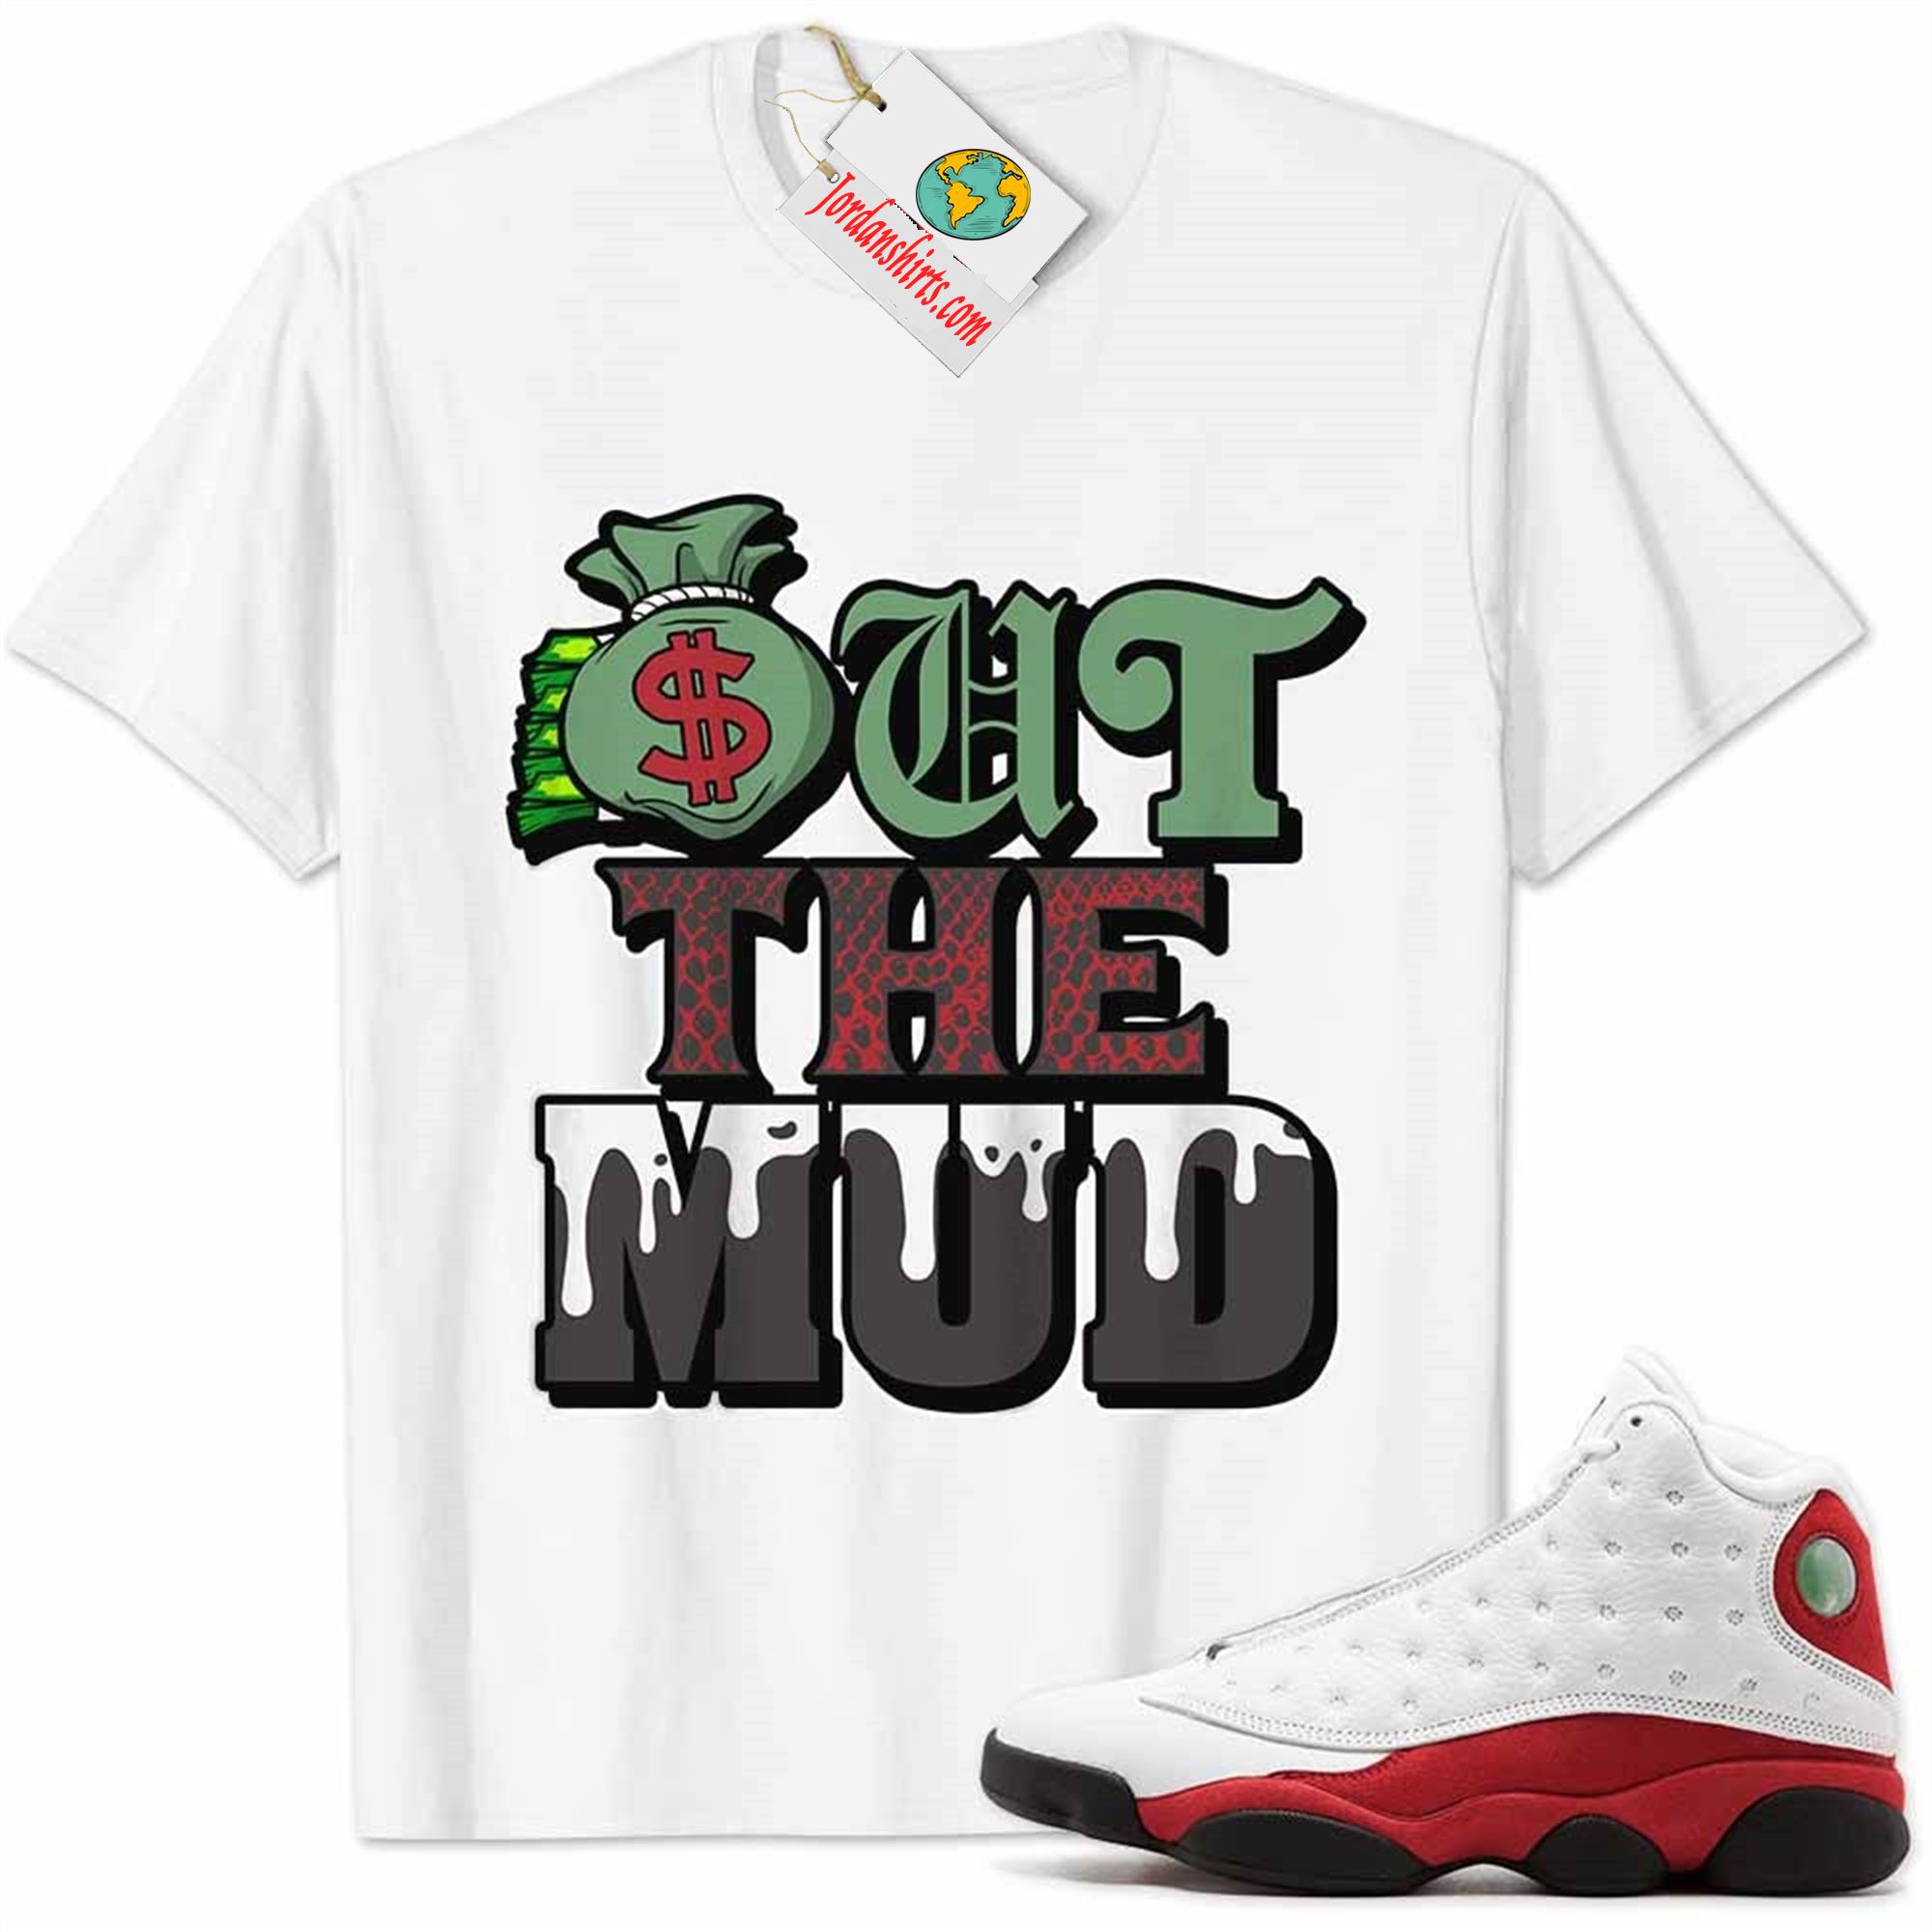 Jordan 13 Shirt, Jordan 13 Chicago Shirt Out The Mud Money Bag White Size Up To 5xl